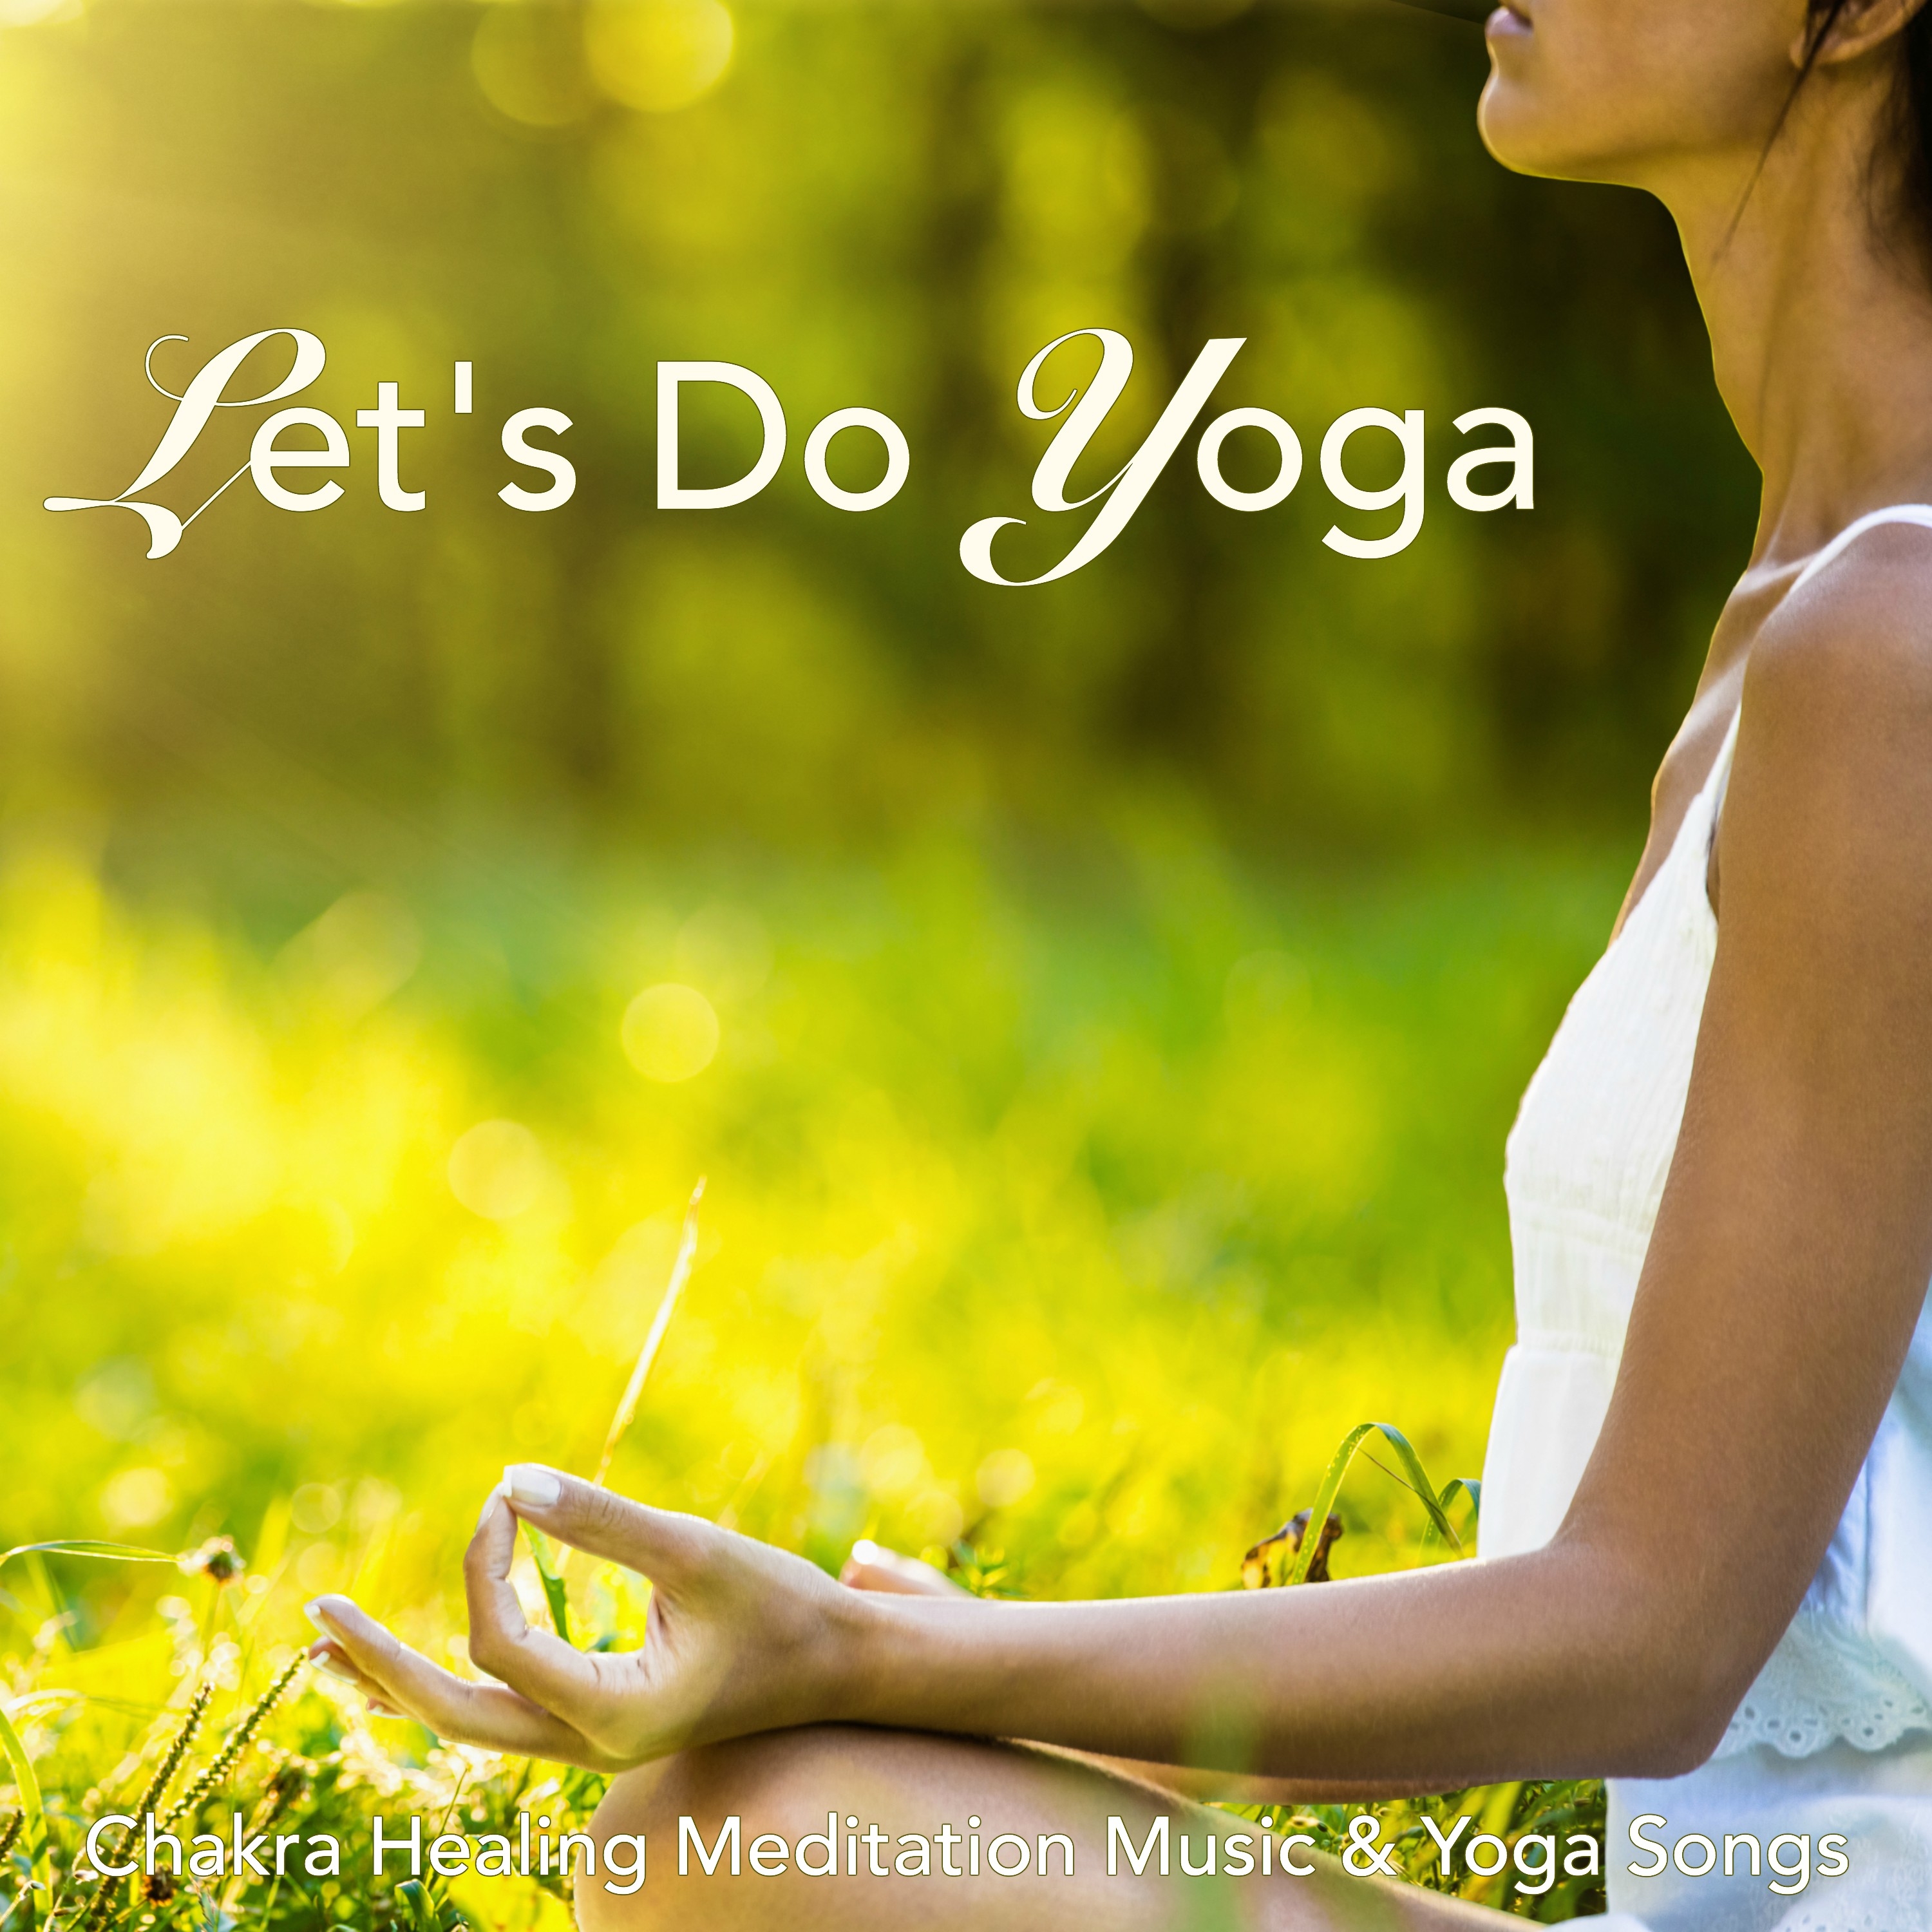 Let' s Do Yoga  Chakra Healing Meditation Music  Yoga Songs